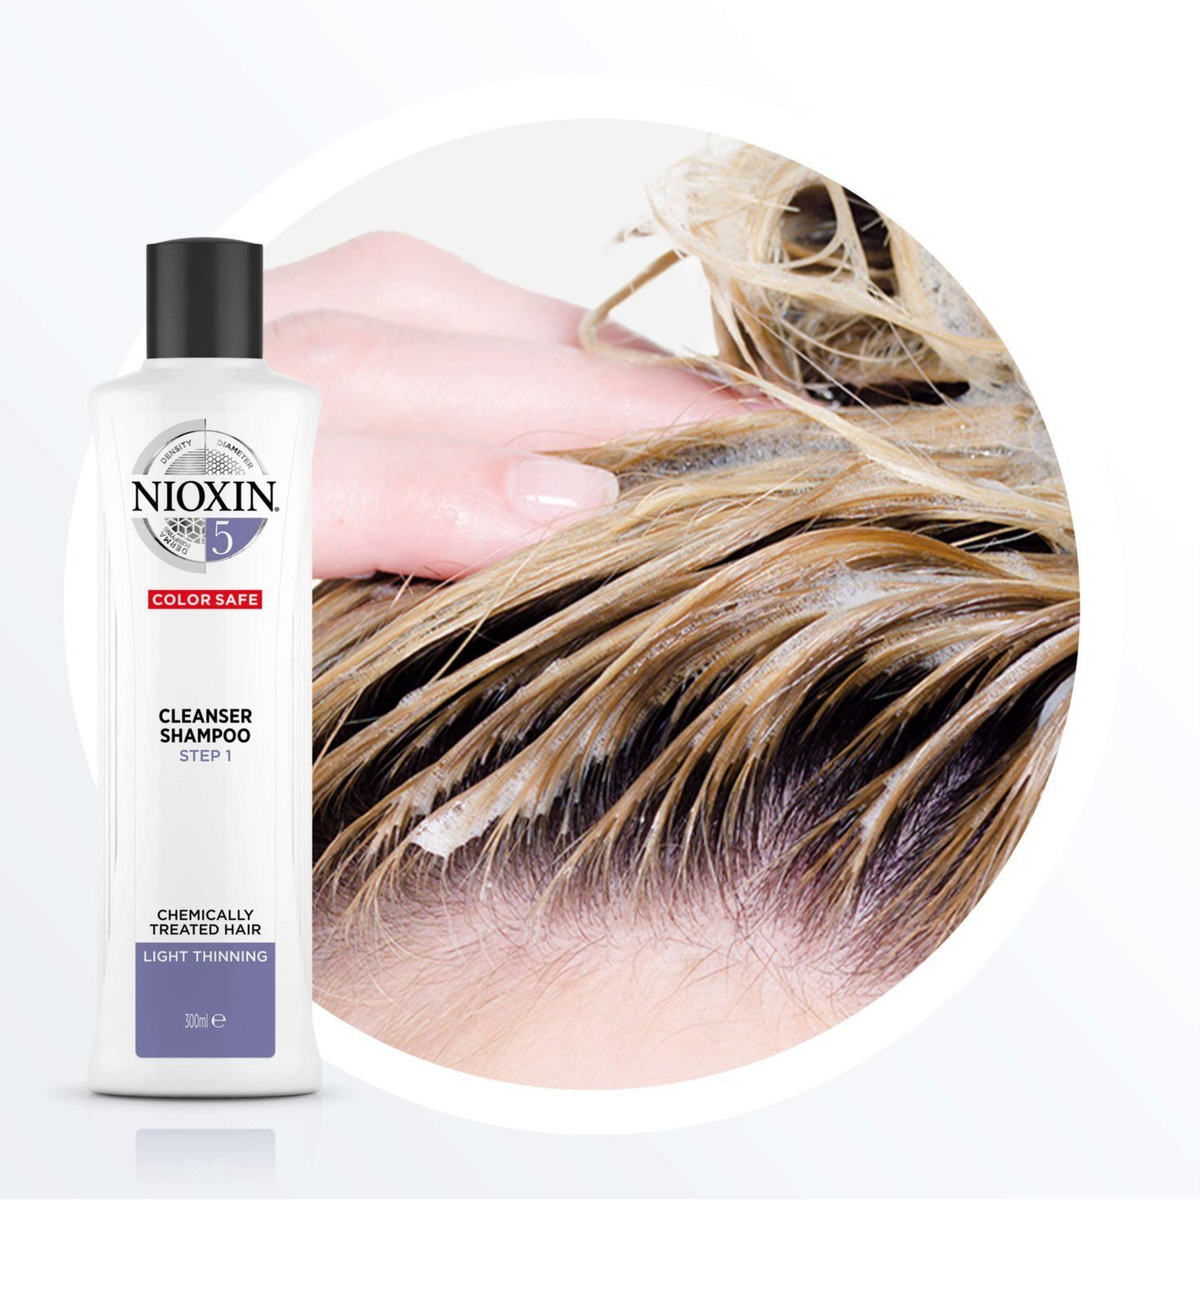 Nioxin System 5 shampoo